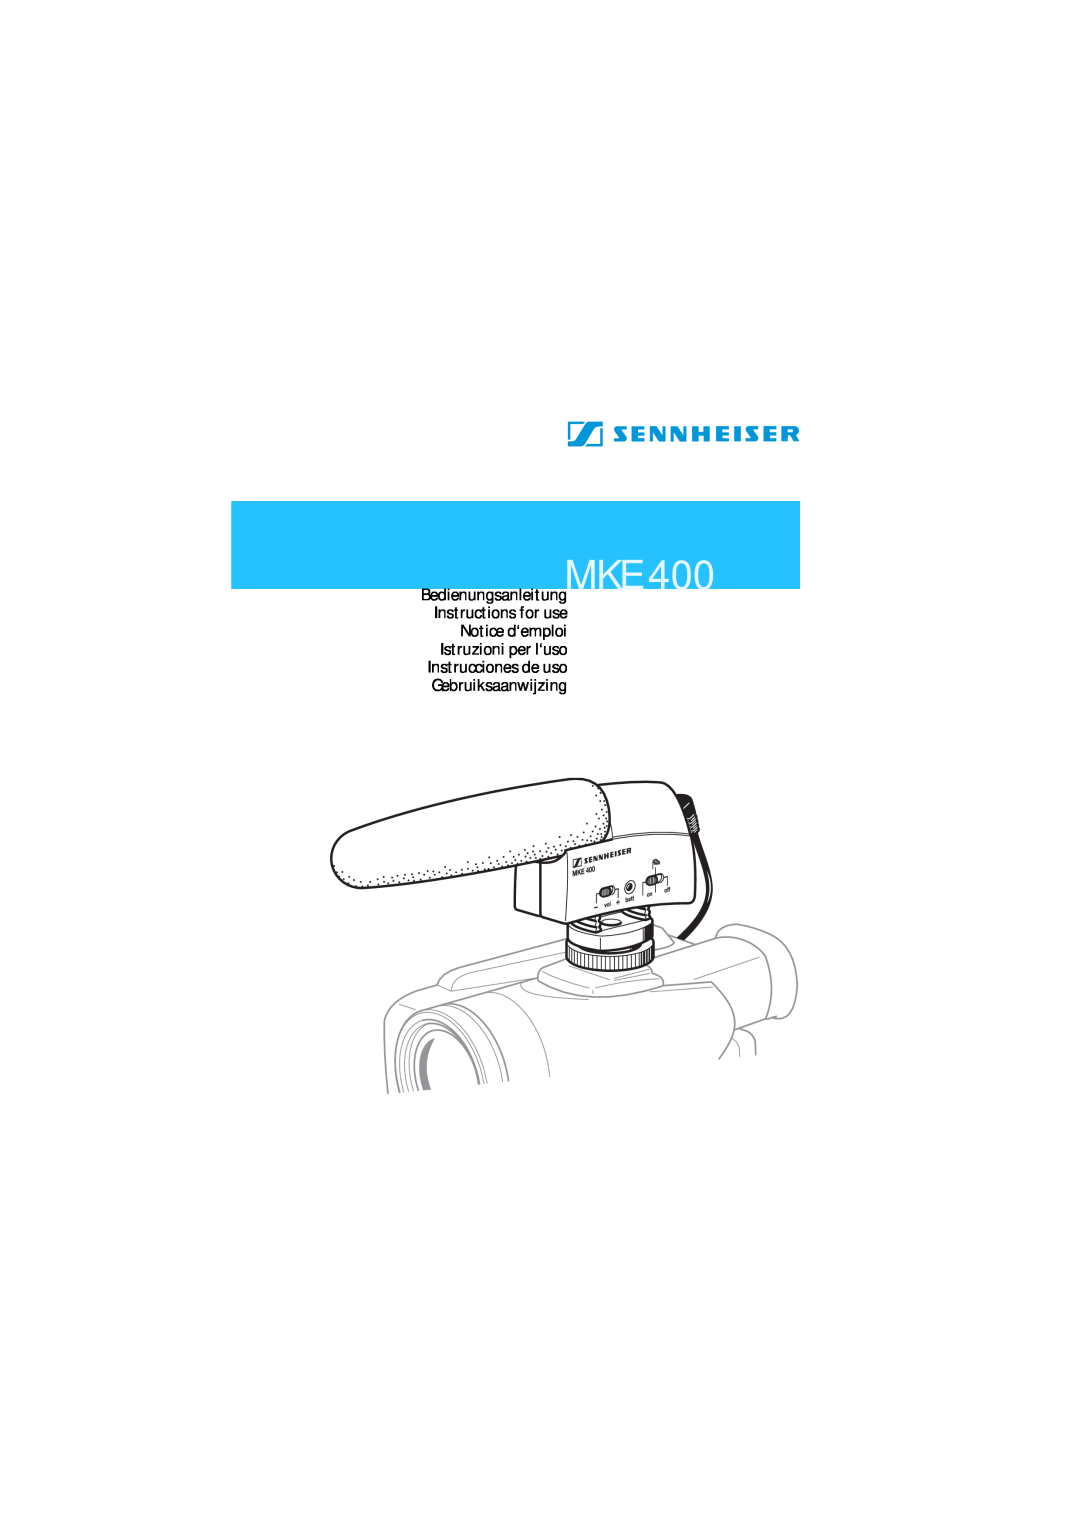 Sennheiser manual BedienungsanleitungMKE 400 Instructions for use 